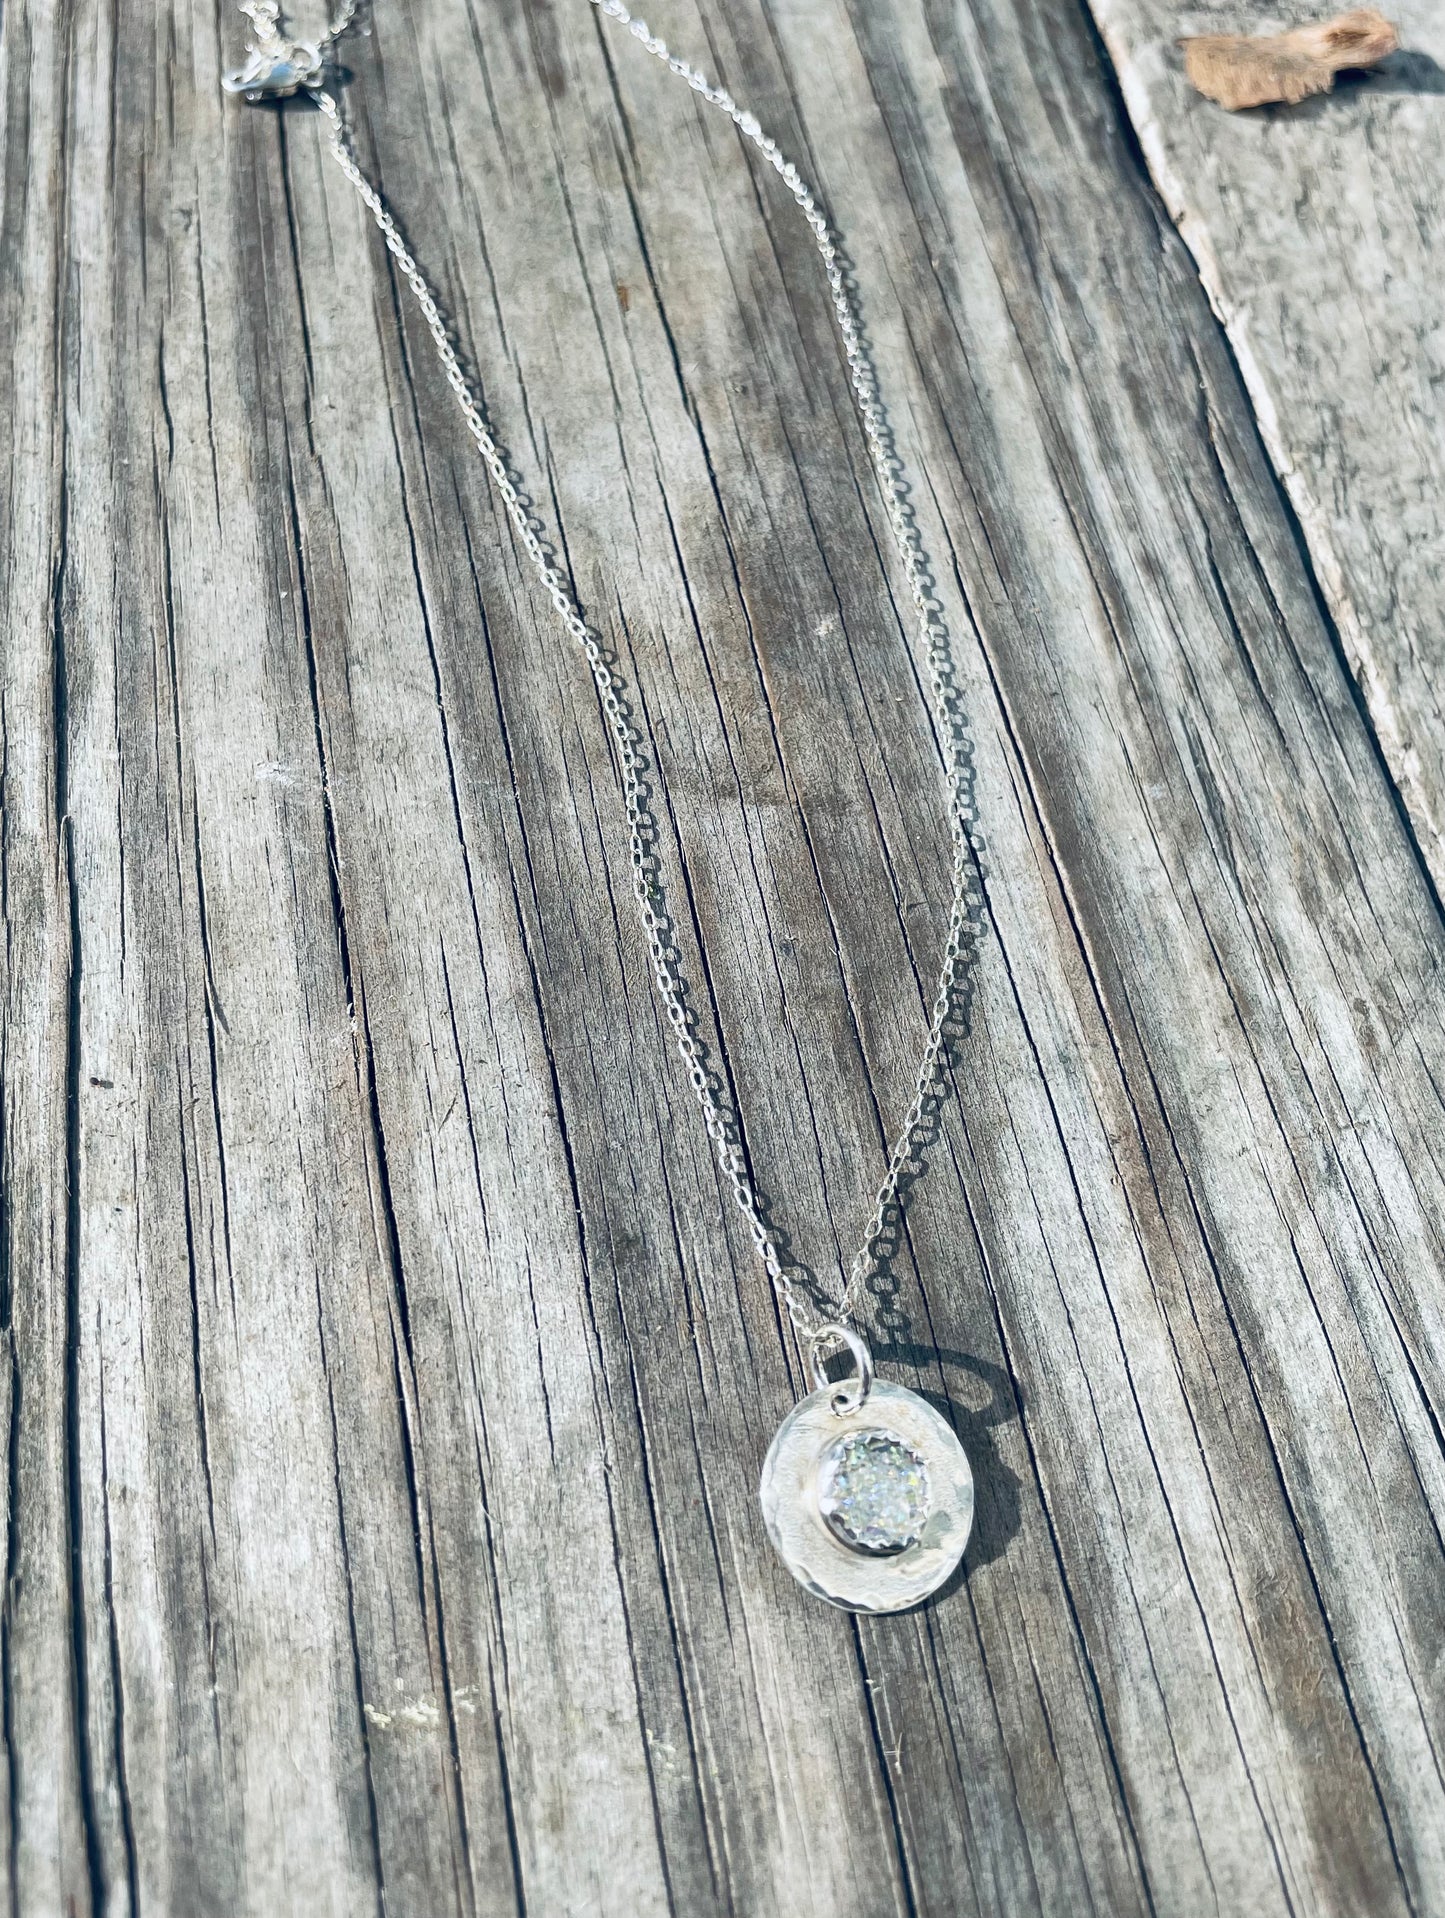 Geode Medallion Necklace